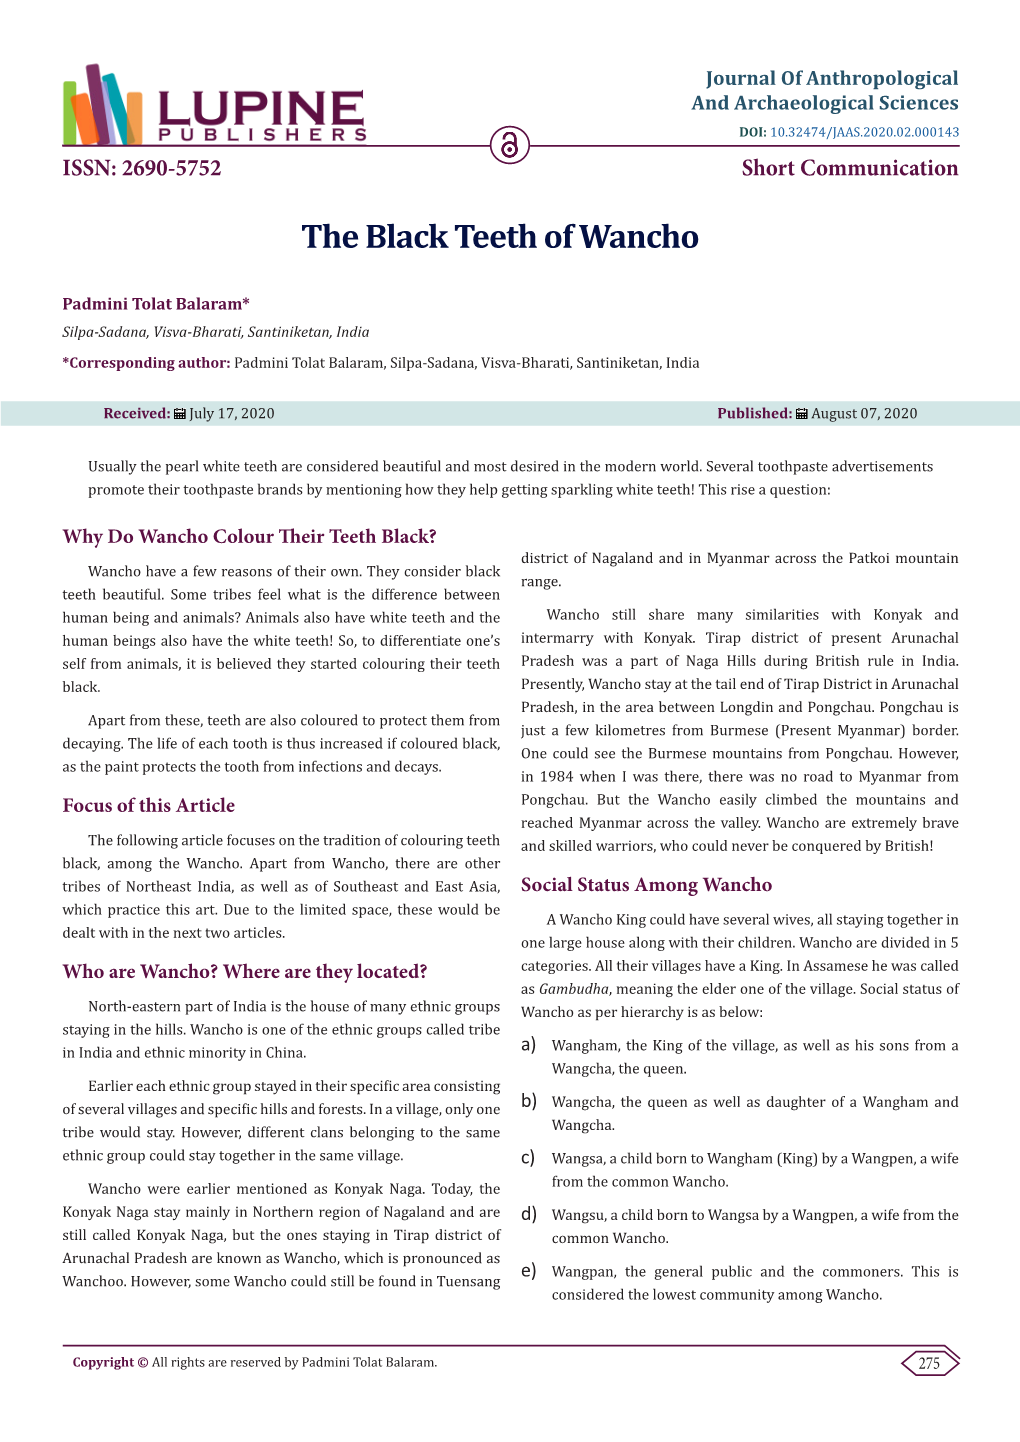 The Black Teeth of Wancho